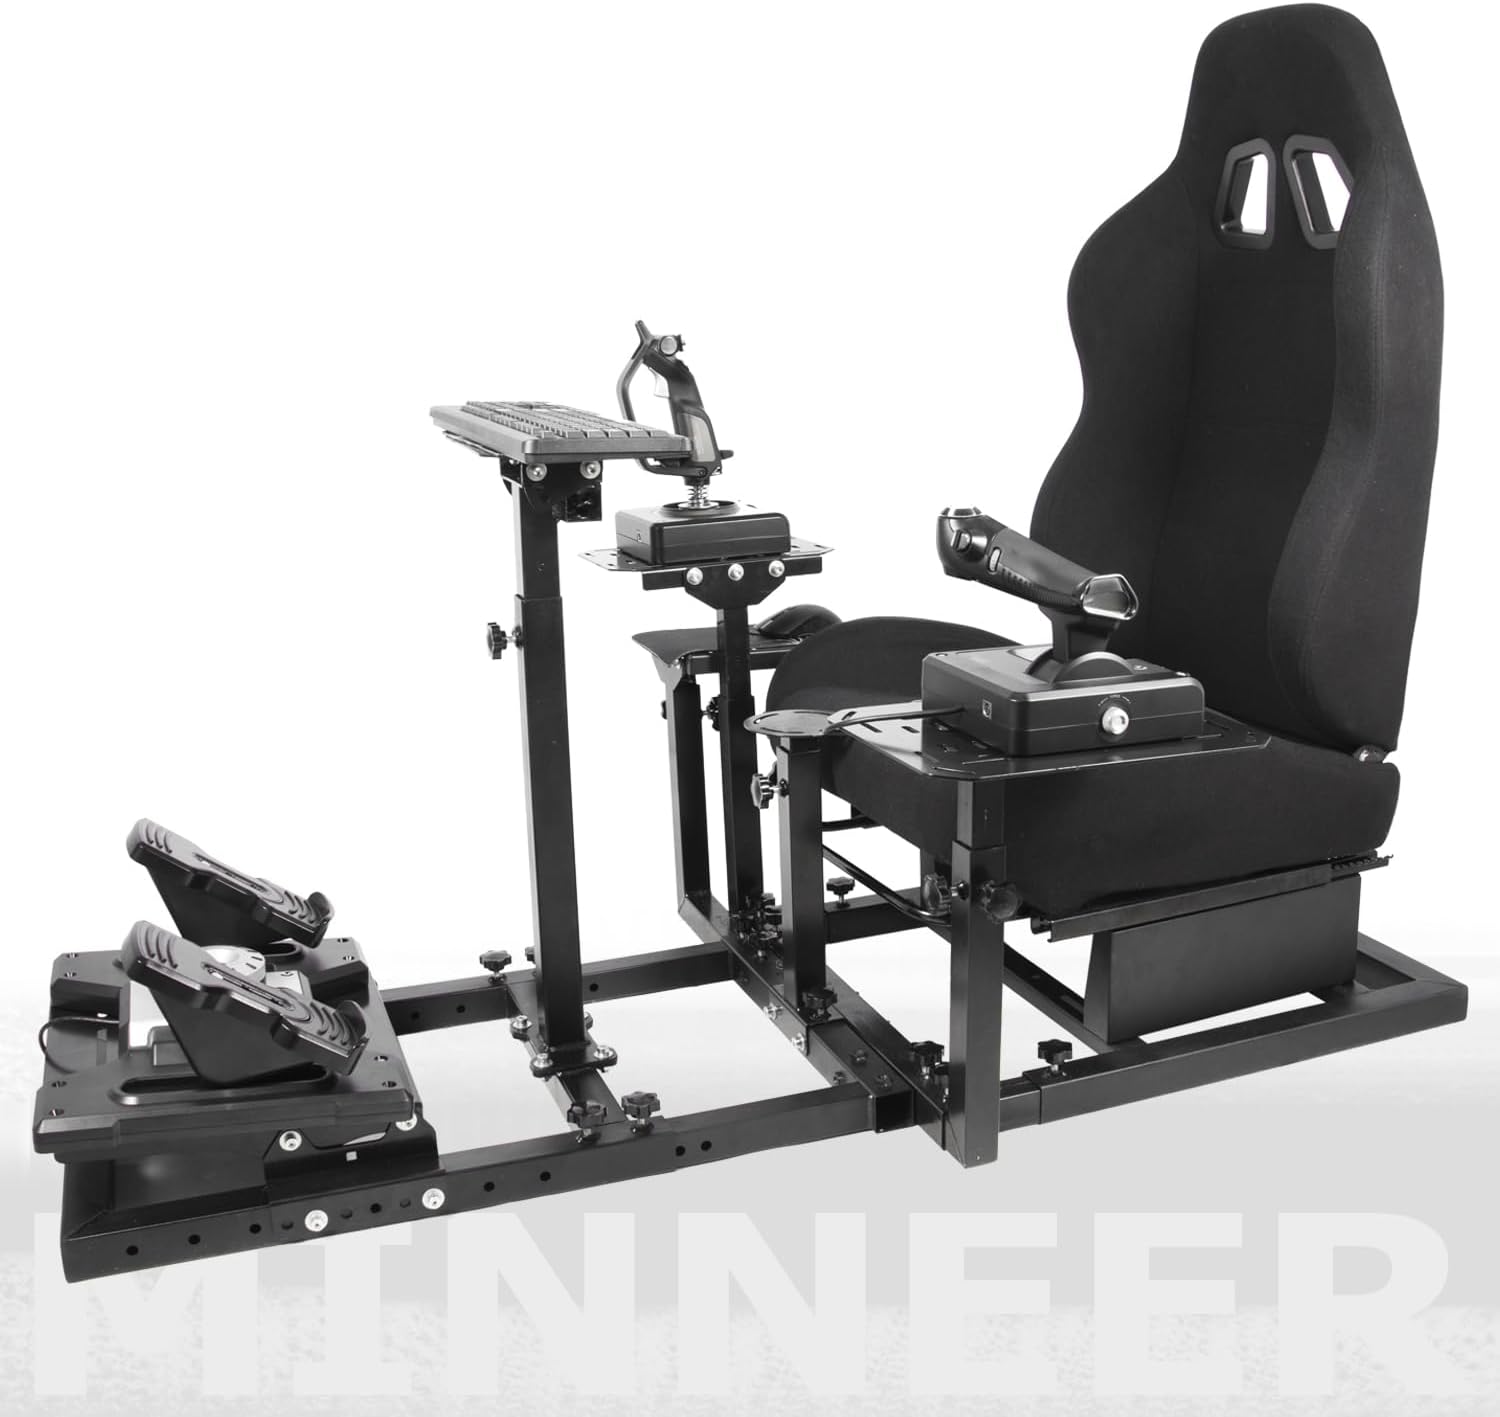 Minneer Upgrade Flight Racing Simualtor Cockpit with Seat for Logitech